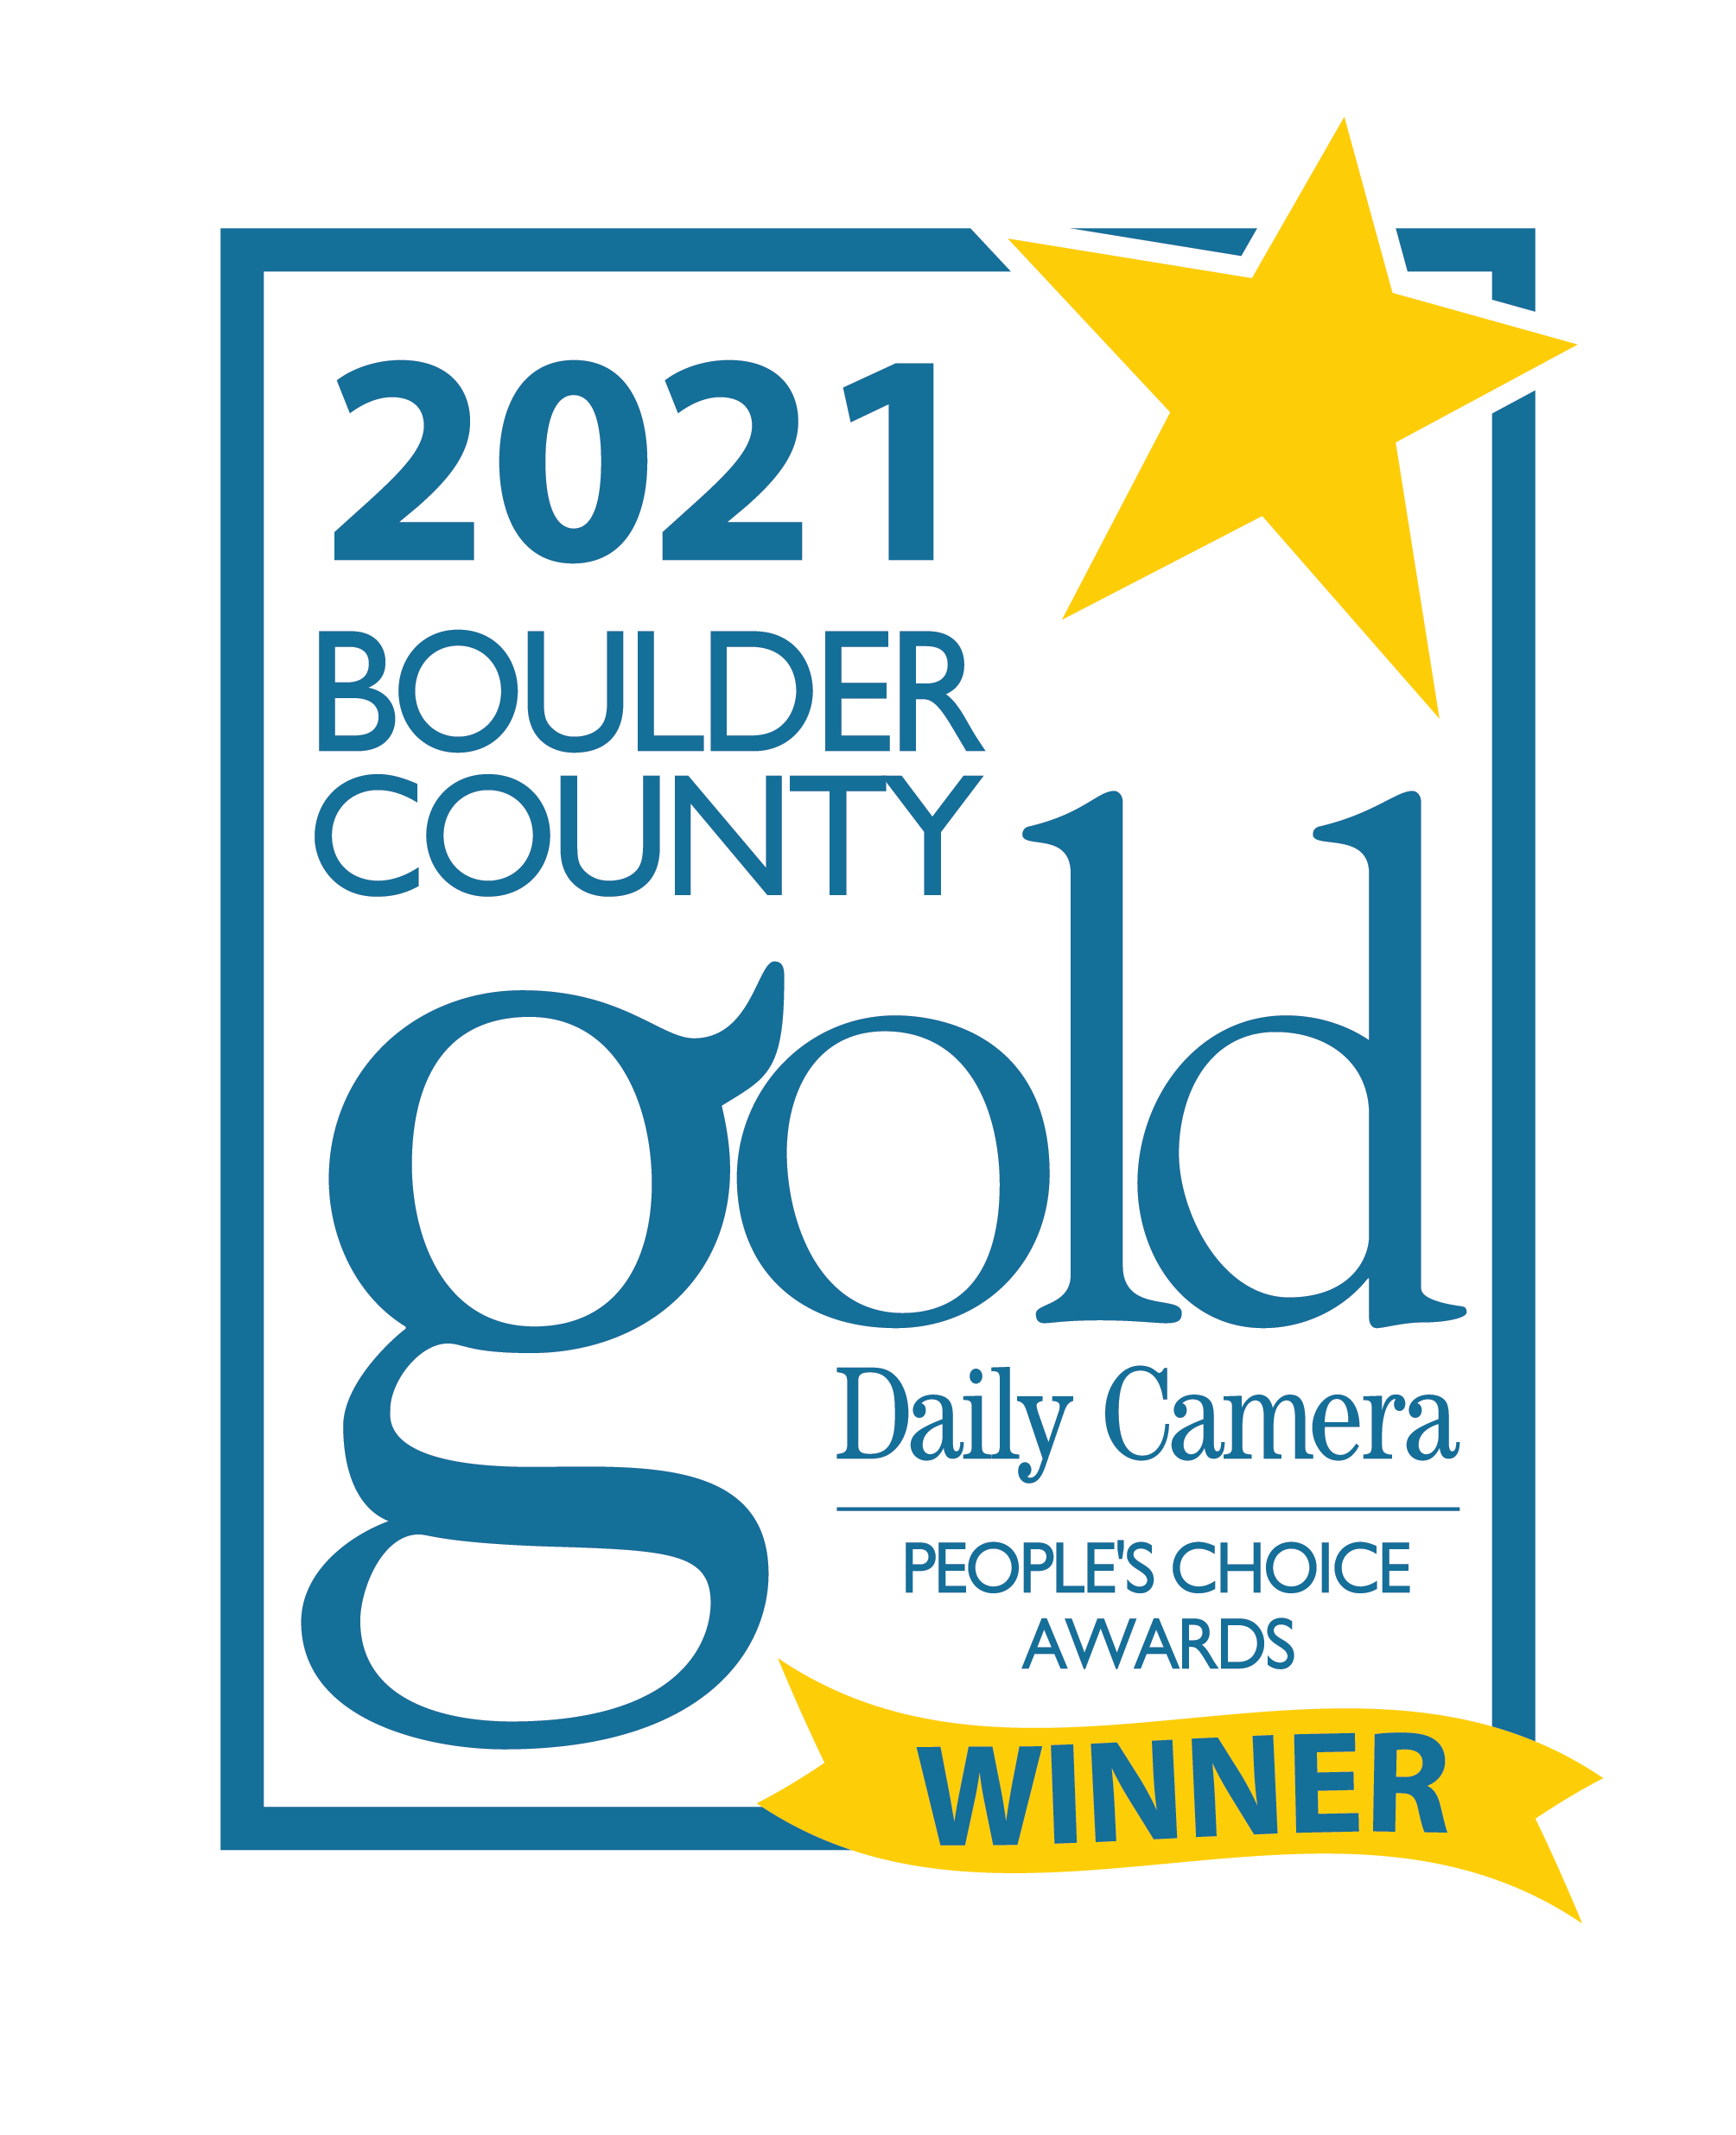 Daily Camera: 2021 Boulder County Gold